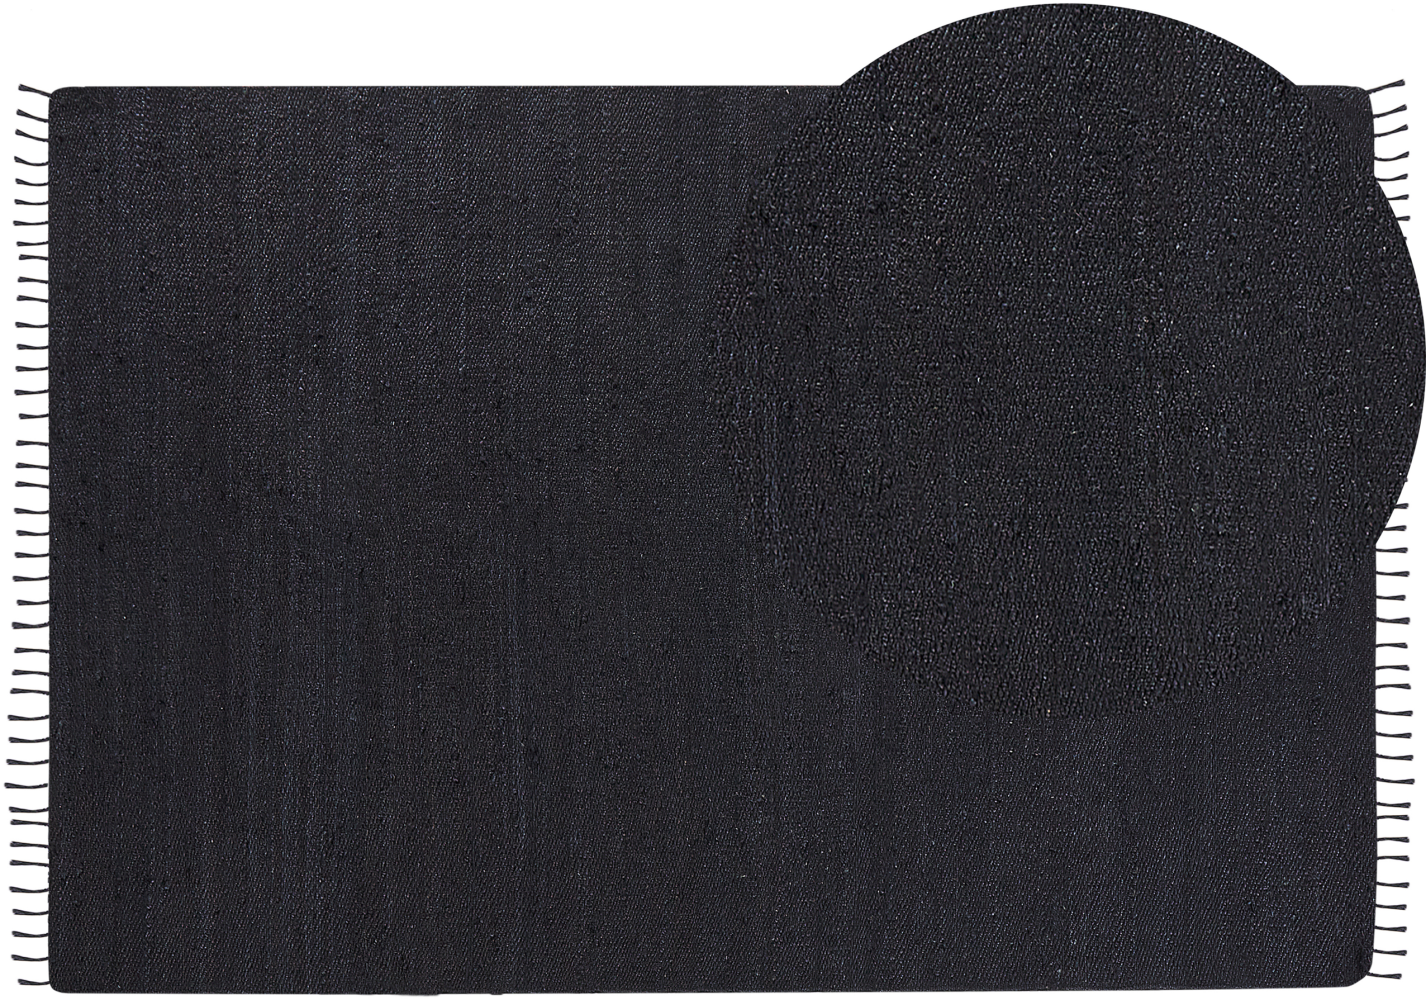 Teppich Jute schwarz 160 x 230 cm Kurzflor SINANKOY Bild 1